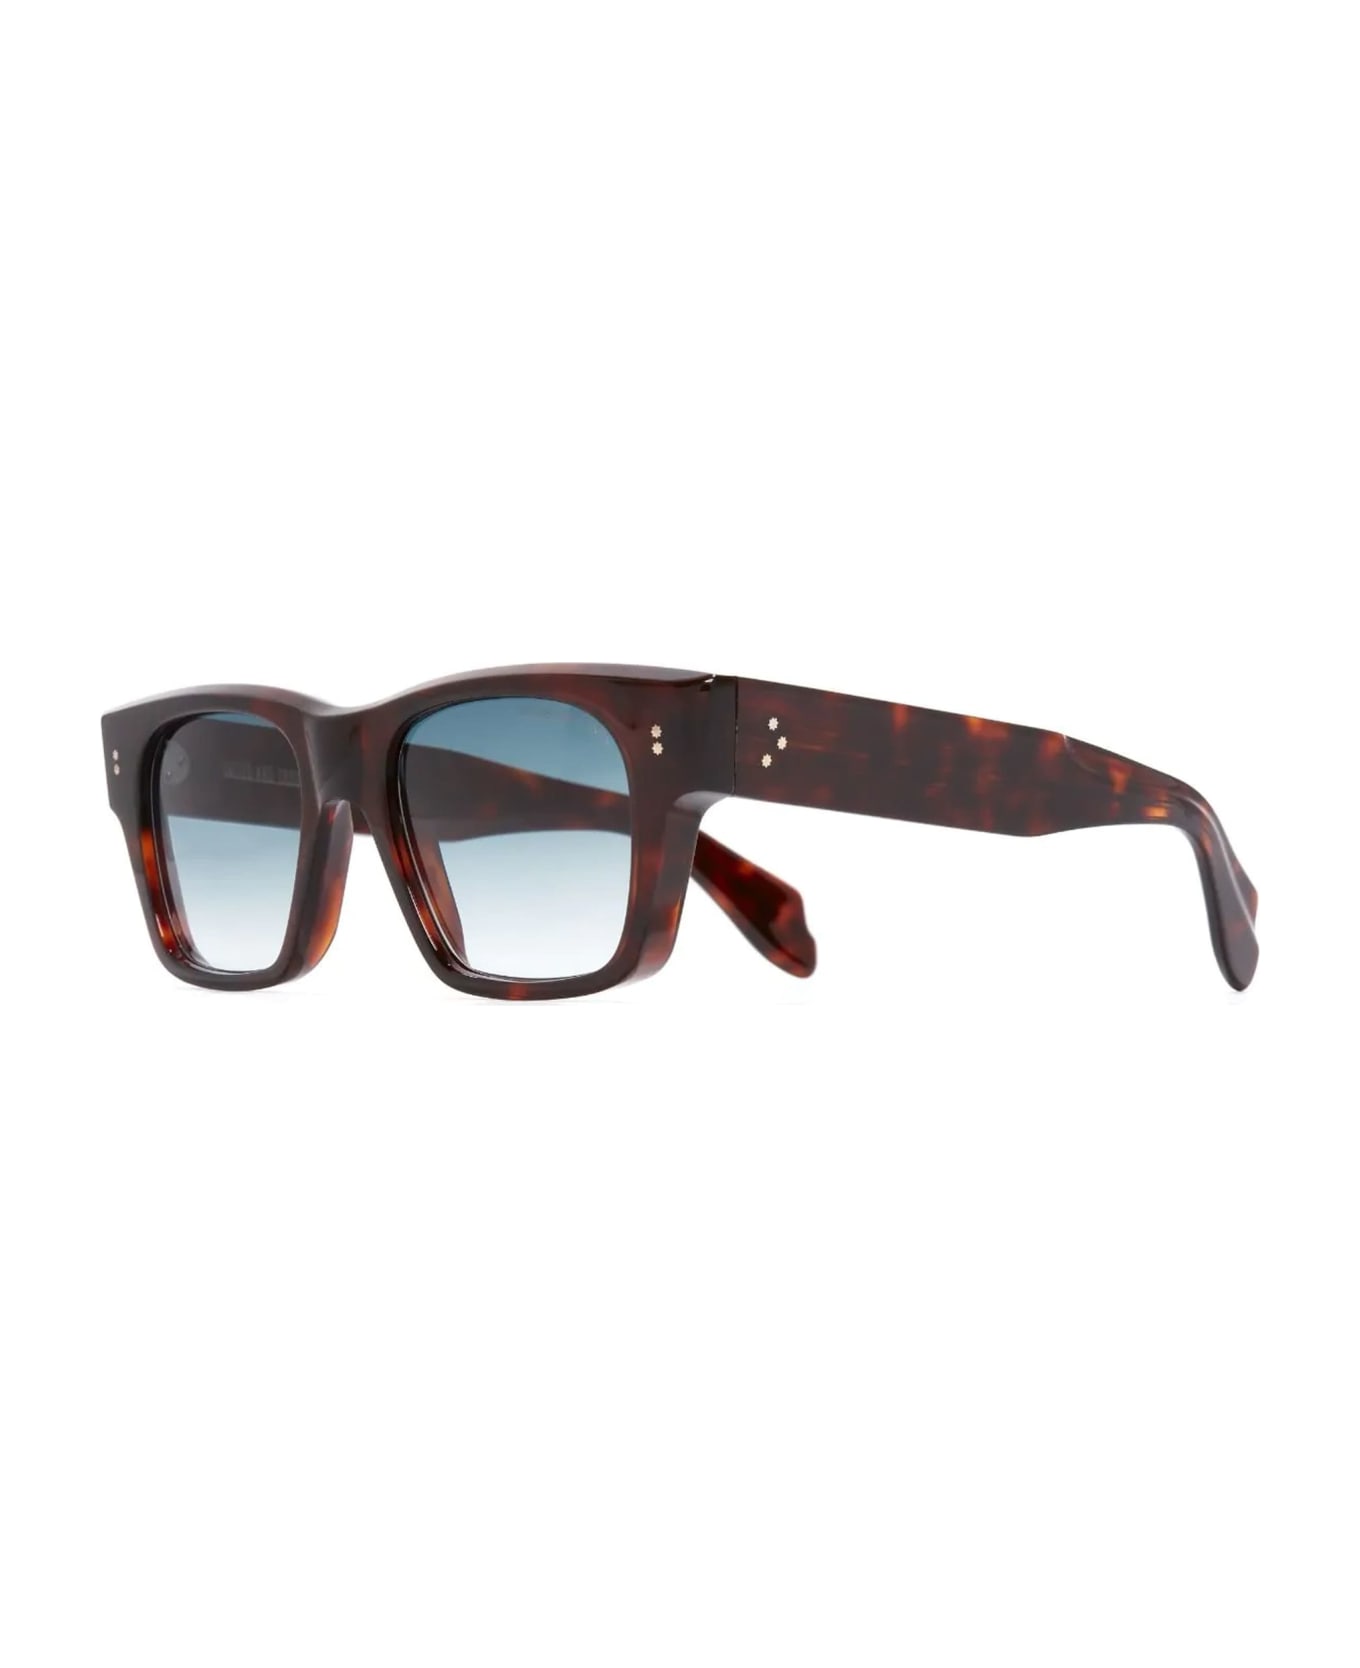 Cutler and Gross 9690 / Dark Turtle Sunglasses - brown